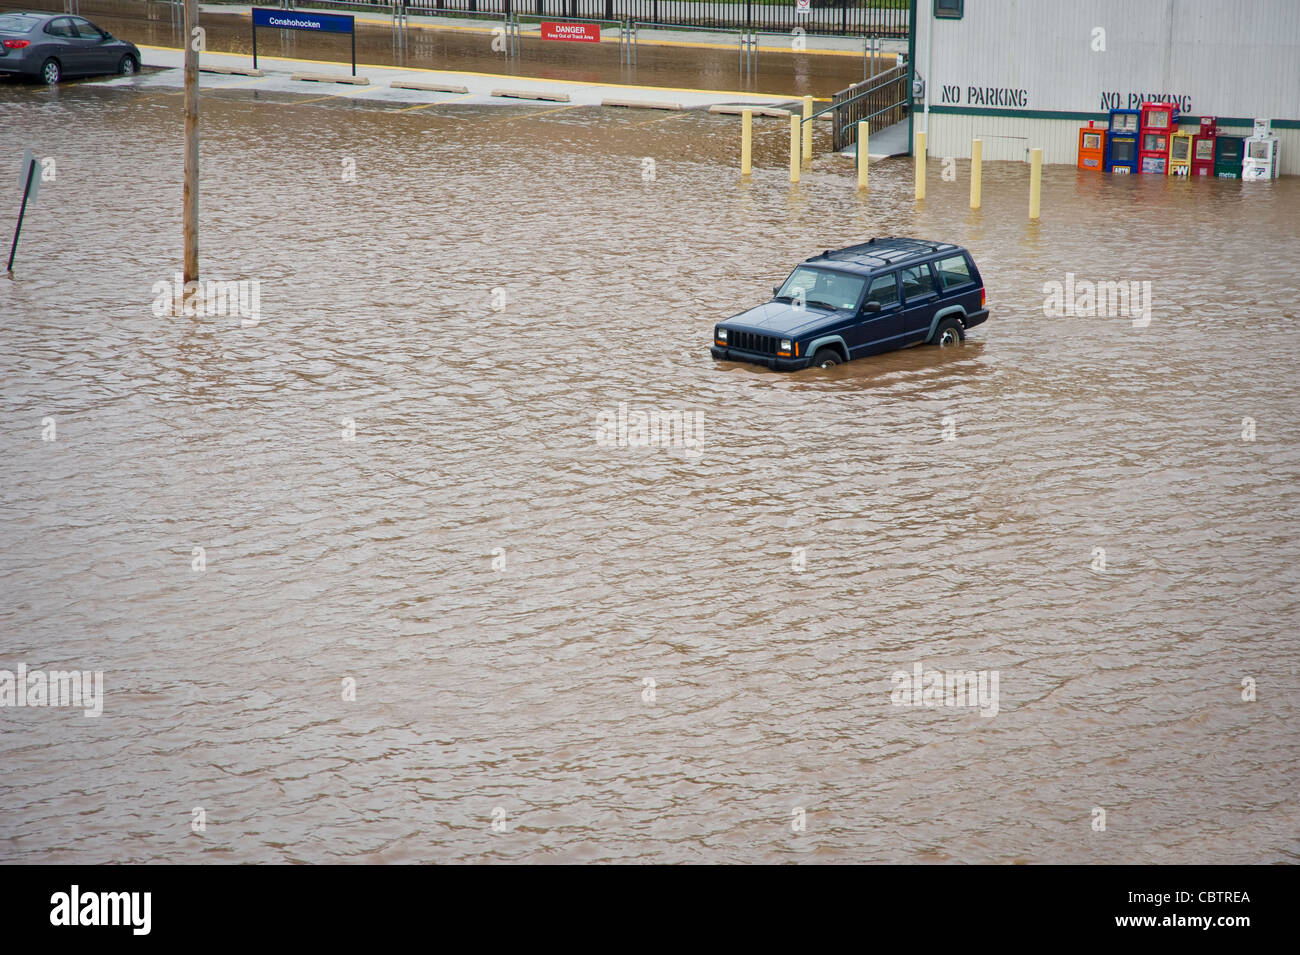 Car In Flood, Flooded Area, Philadelphia, USA Stock Photo